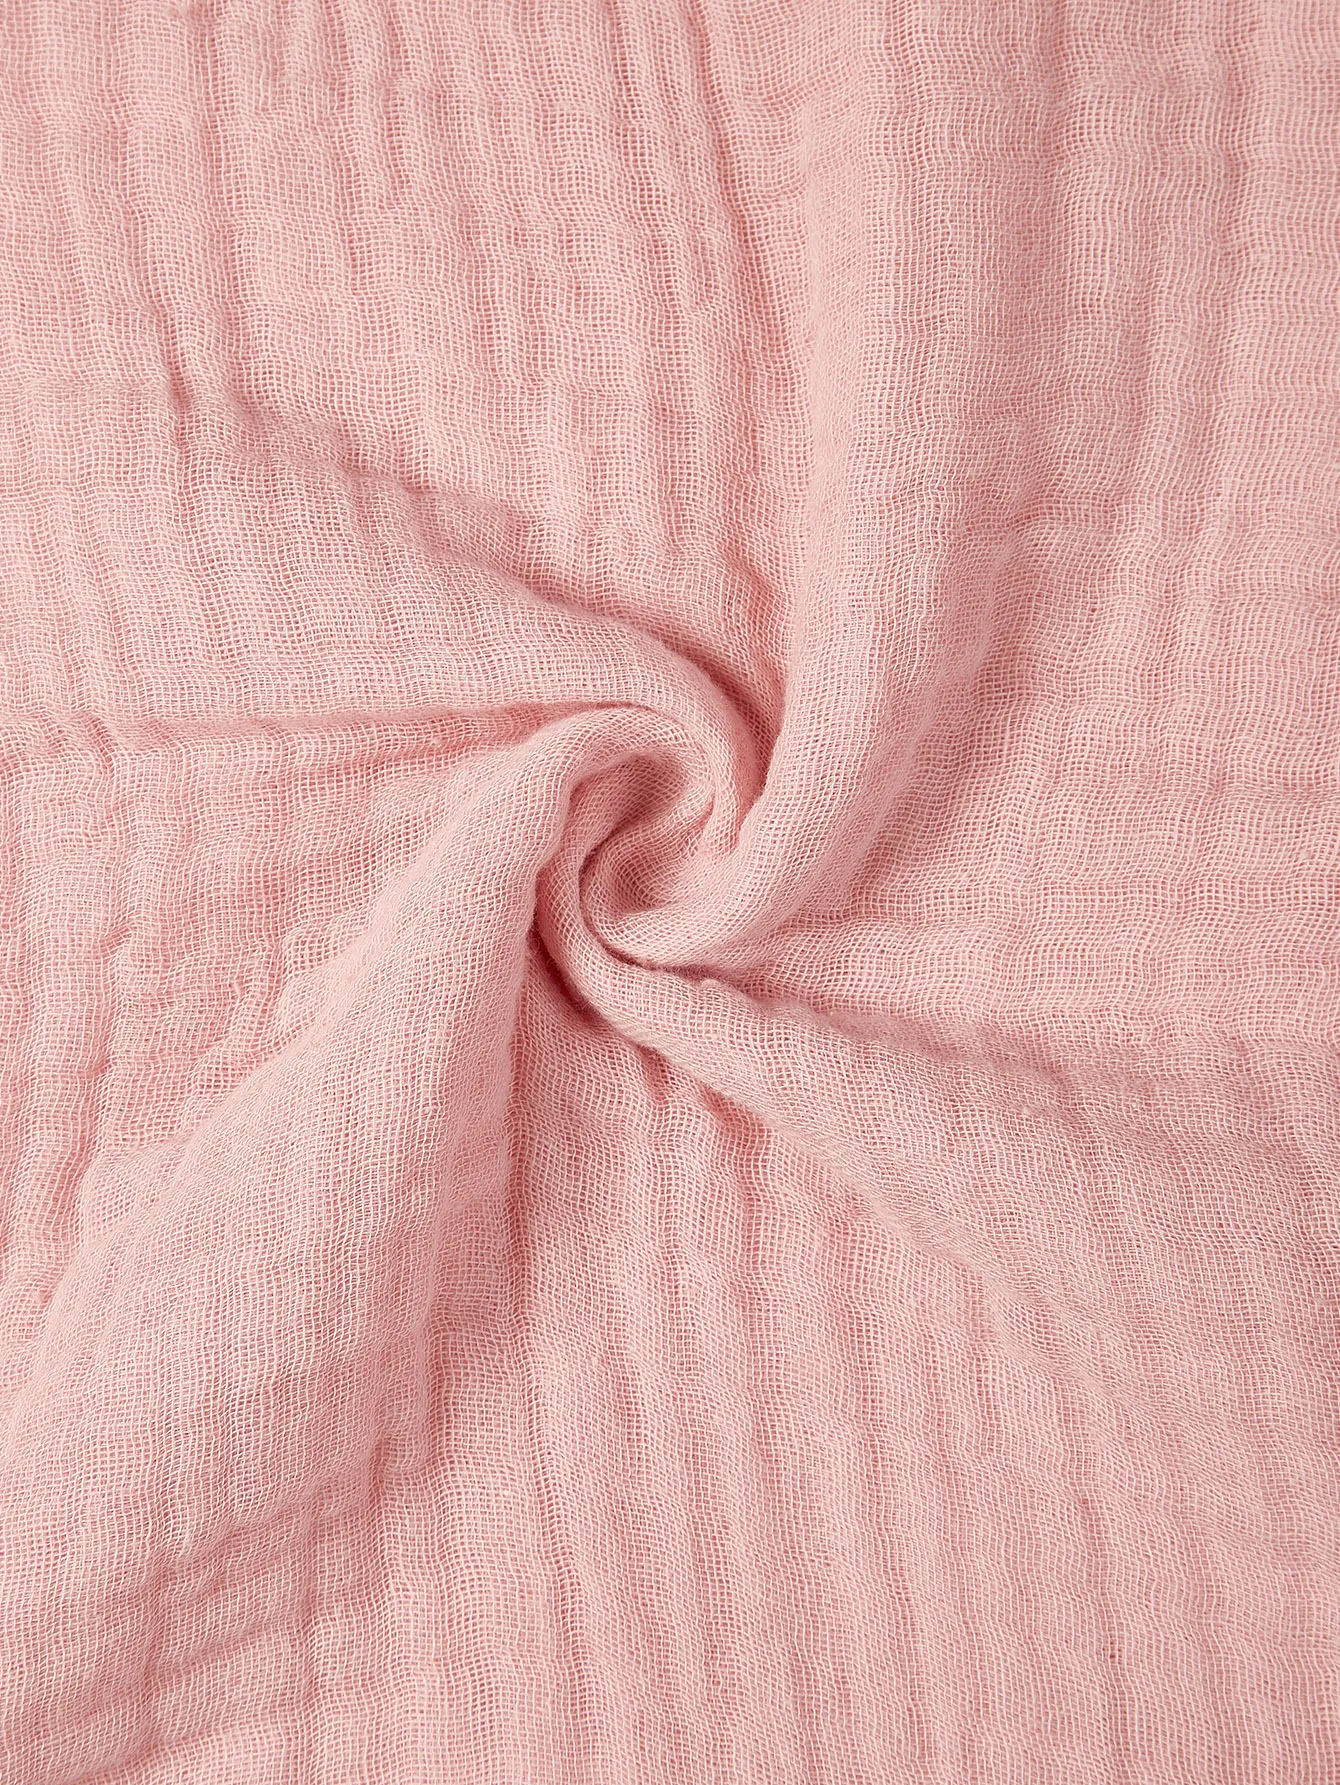 6 layers pure cotton plain bubble gauze bath towel muslin baby stroller cover blanket